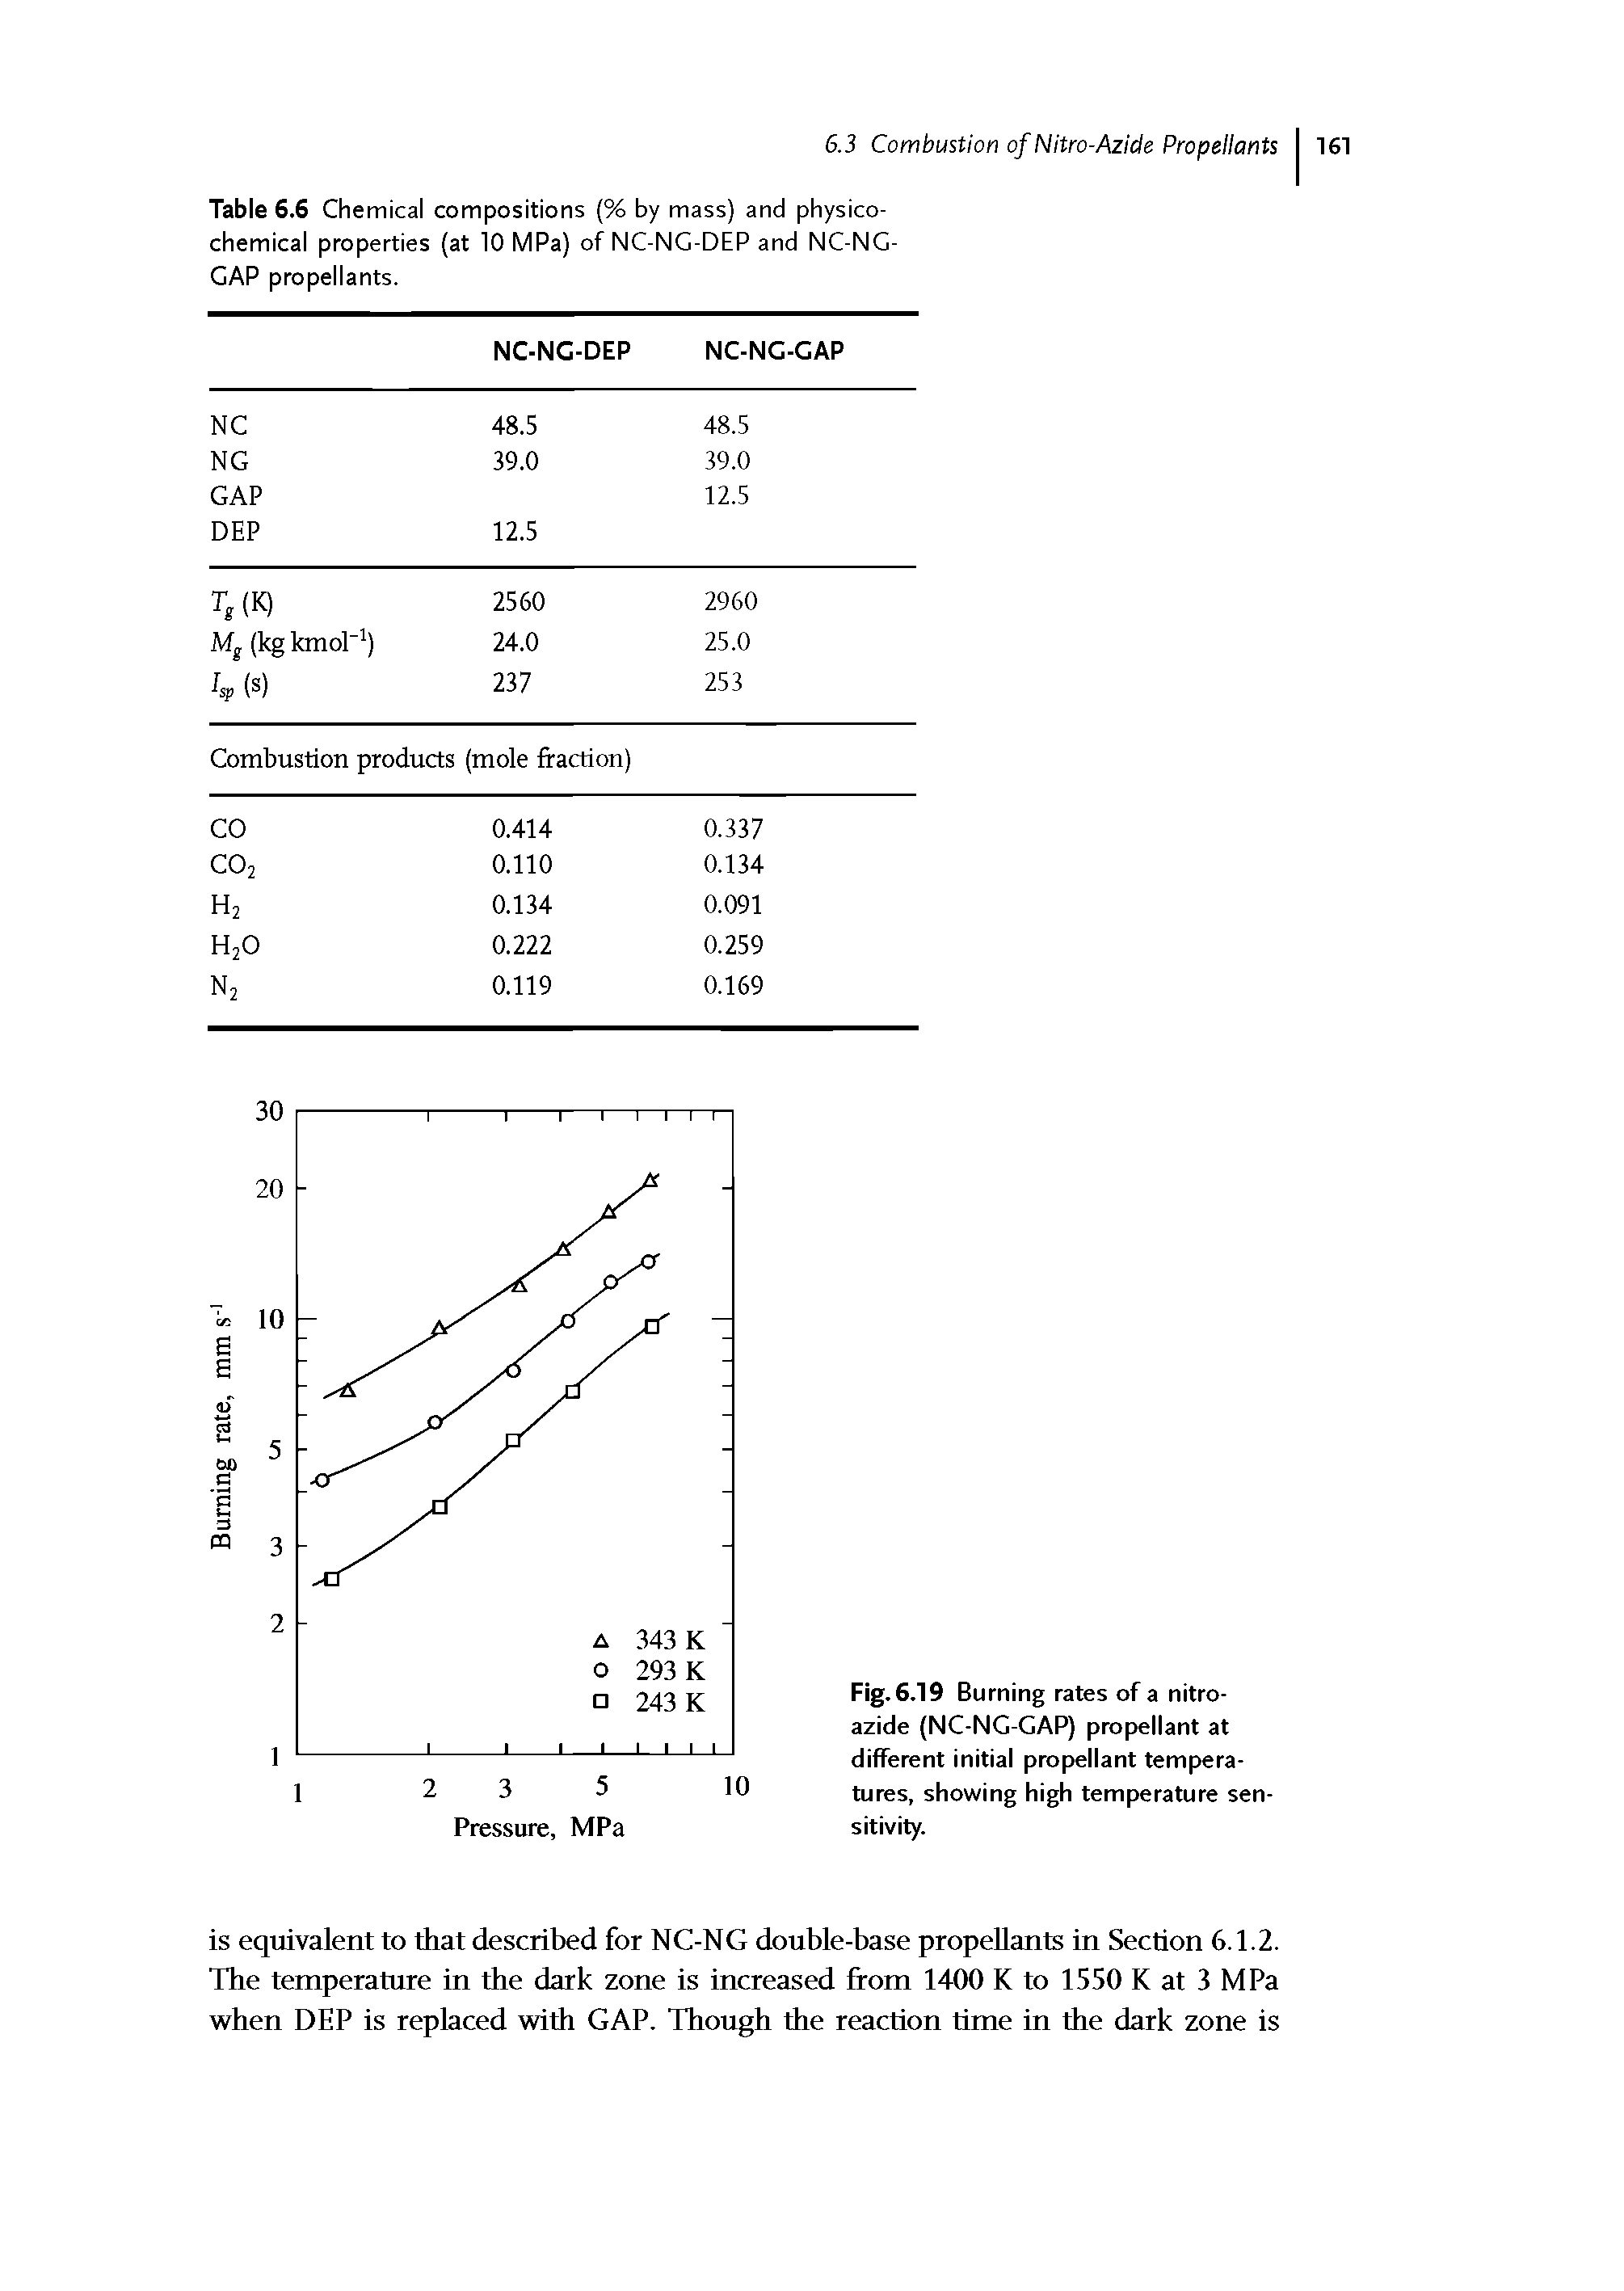 Fig. 6.19 Burning rates of a nitro-azide (NC-NG-GAP) propellant at different initial propellant temperatures, showing high temperature sensitivity.